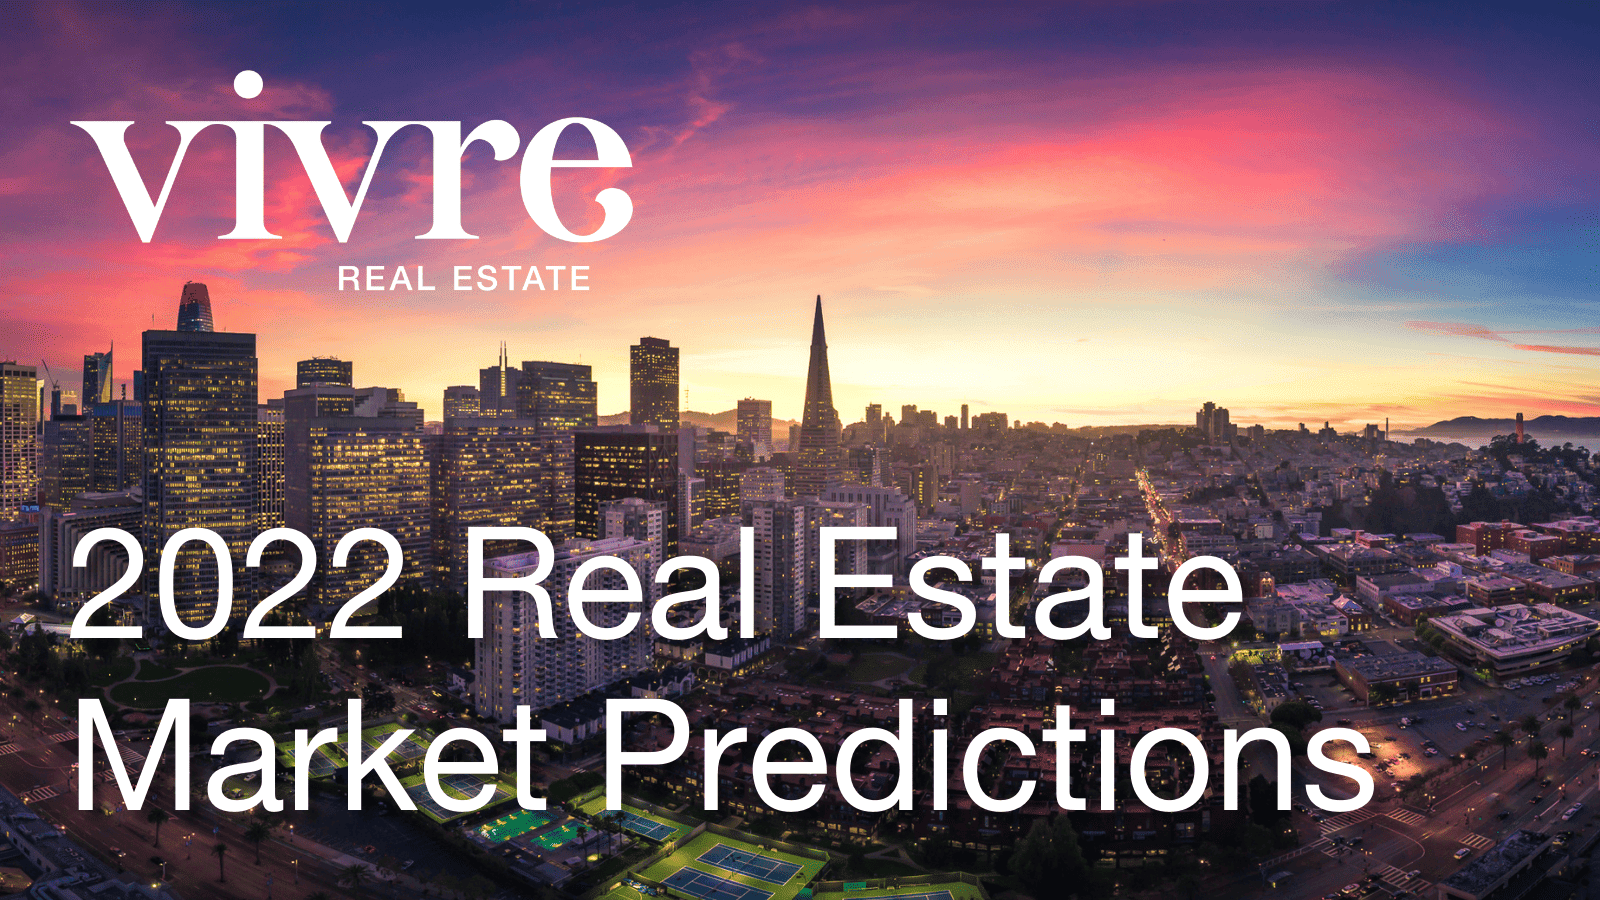 San Francisco Real Estate Market Predictions for 2022